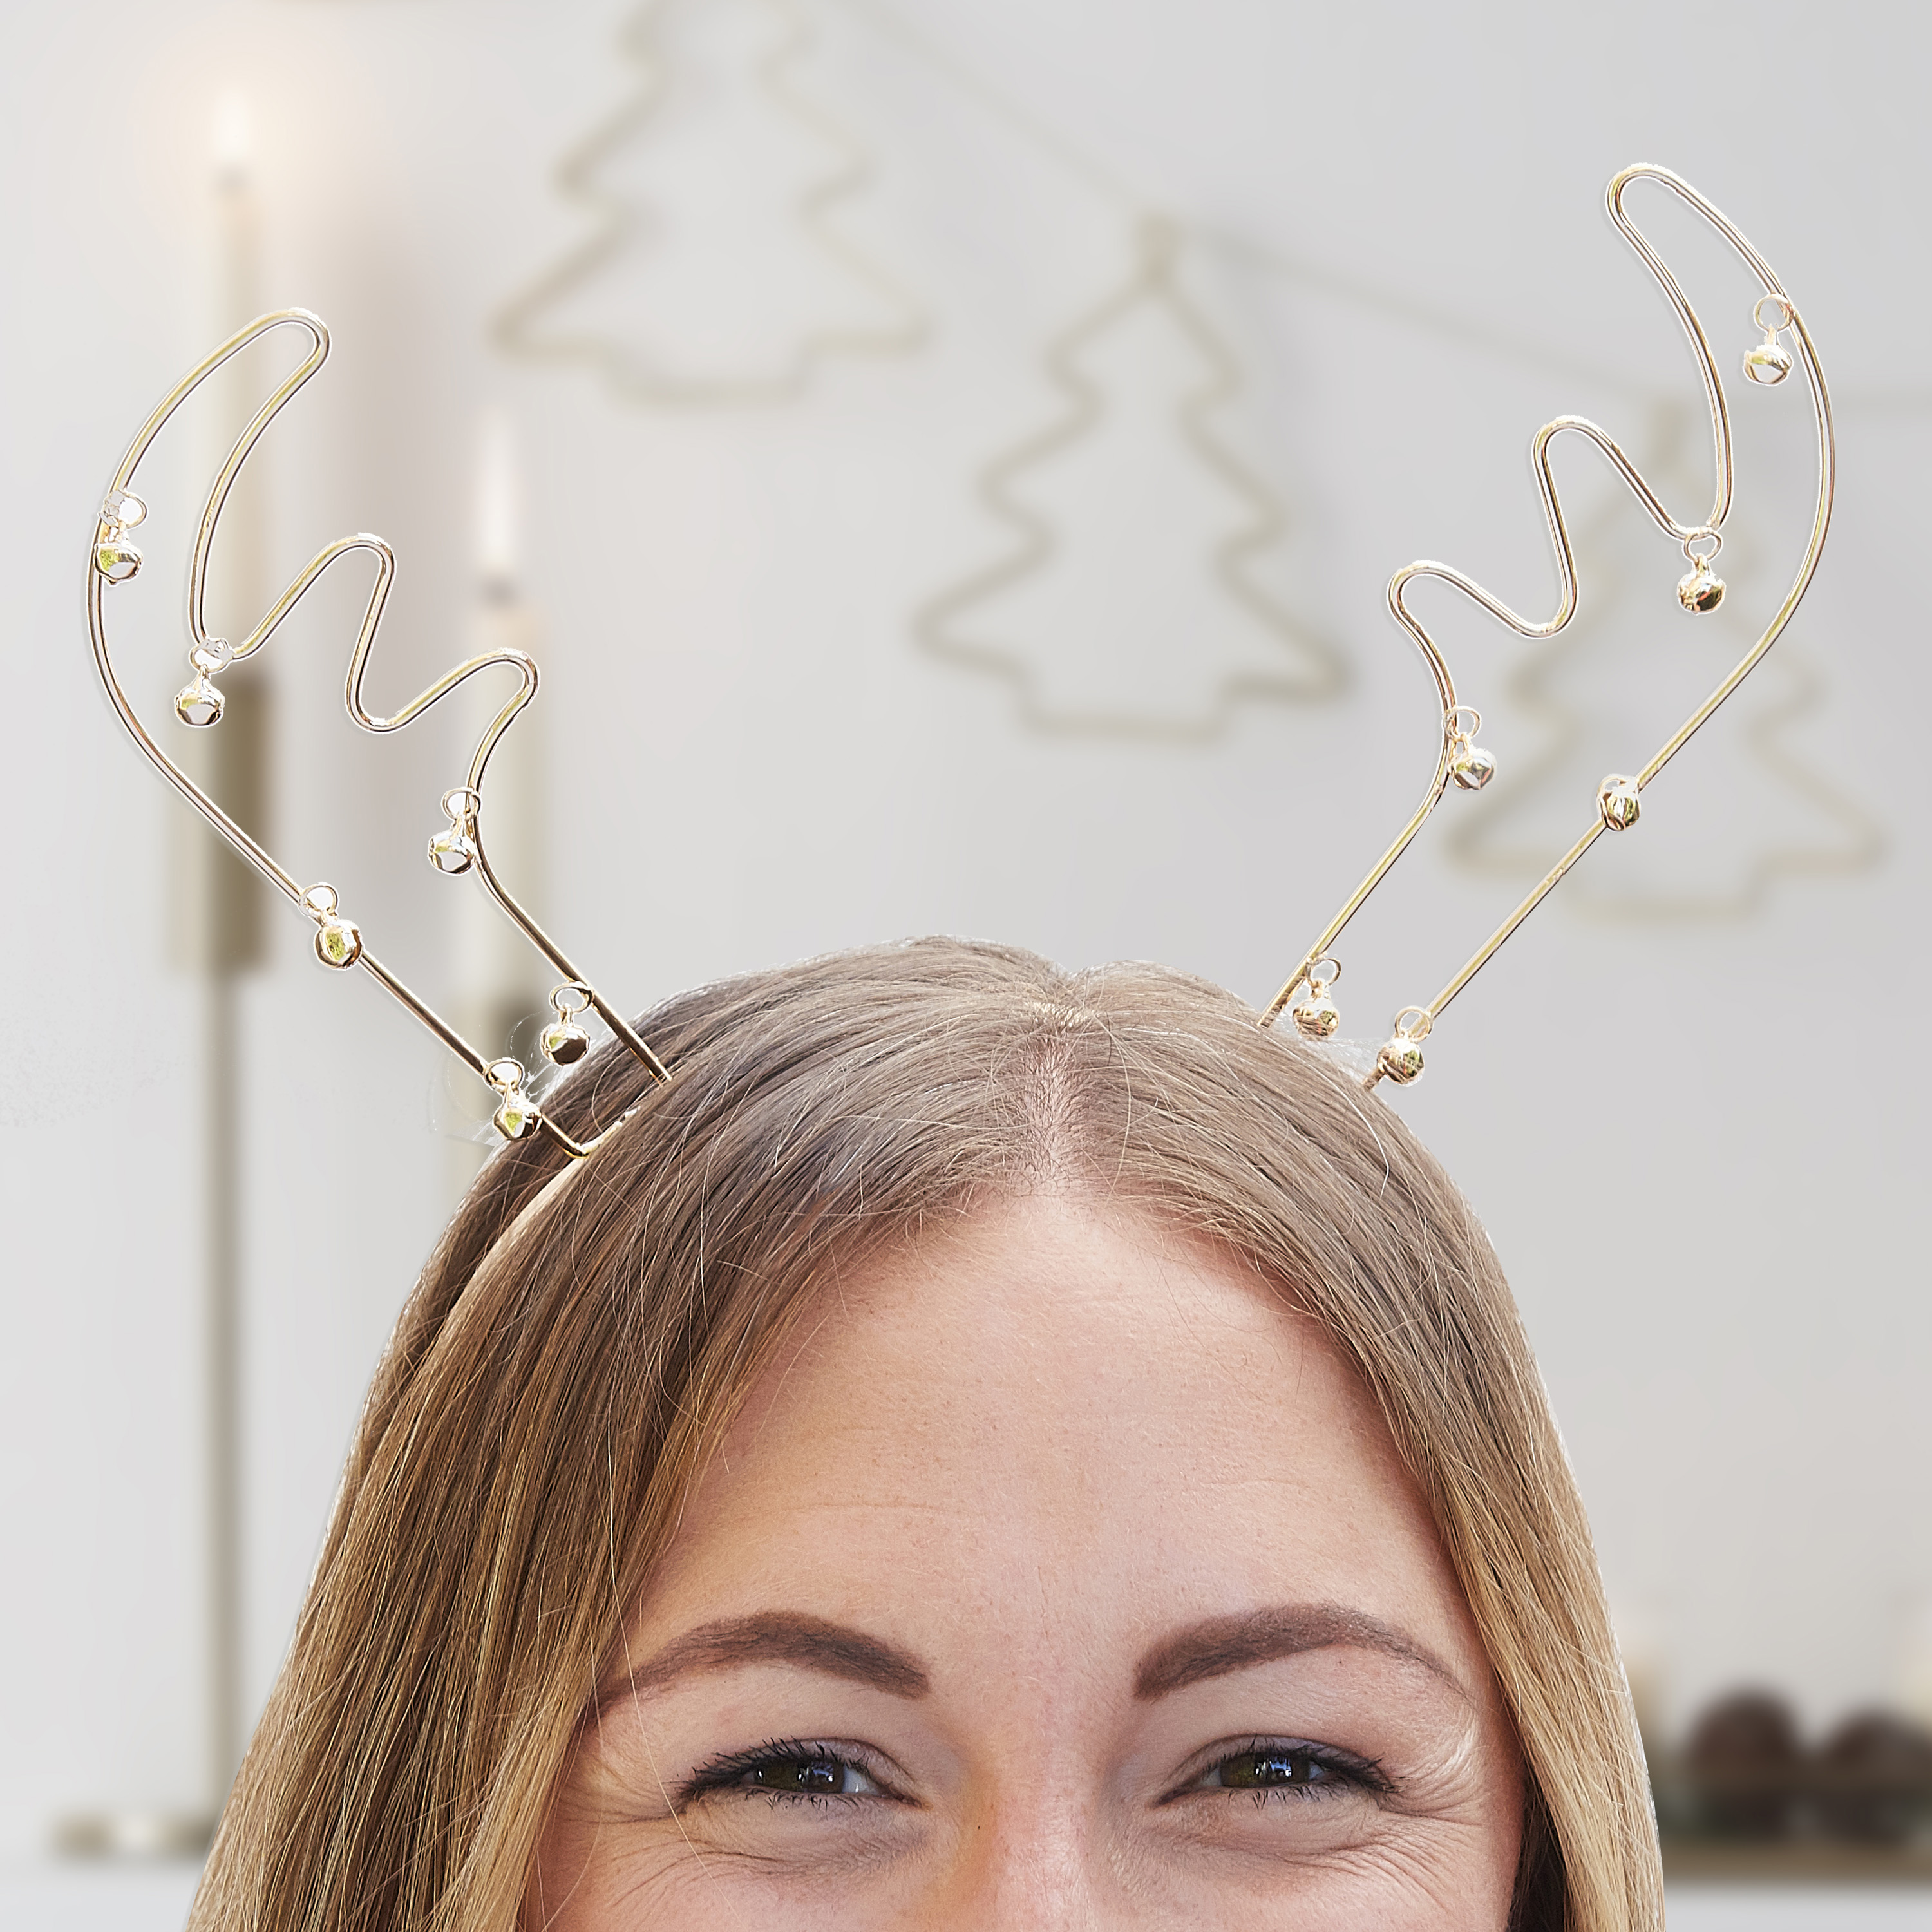 UltraByEasyPeasyStore 1 Antler Headband Christmas Antlers Headband Christmas Hats Novelty Deer Antler Head Band For Adults or Children Xmas Headbands Reindeer Ears 